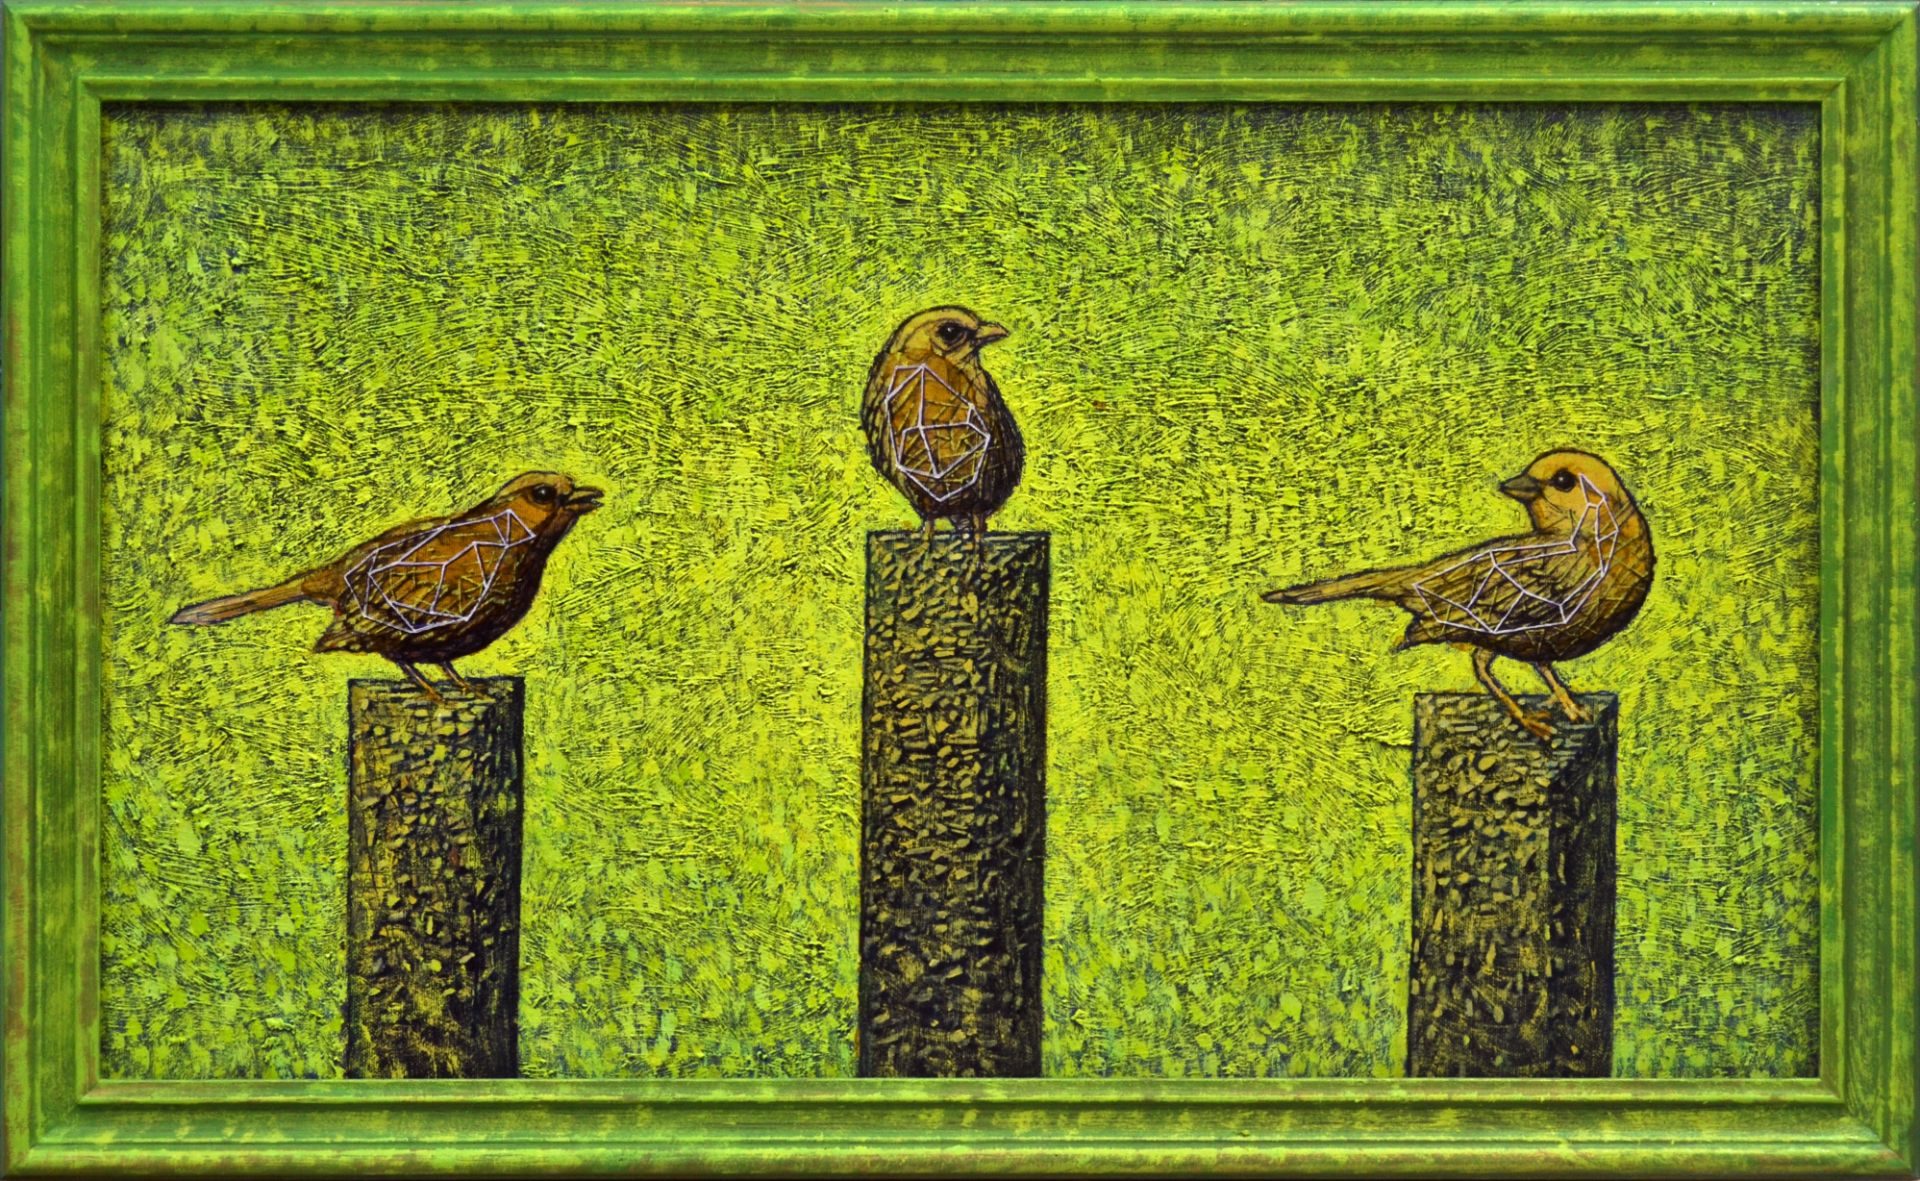 Three sparrows 40x70 cm + frame